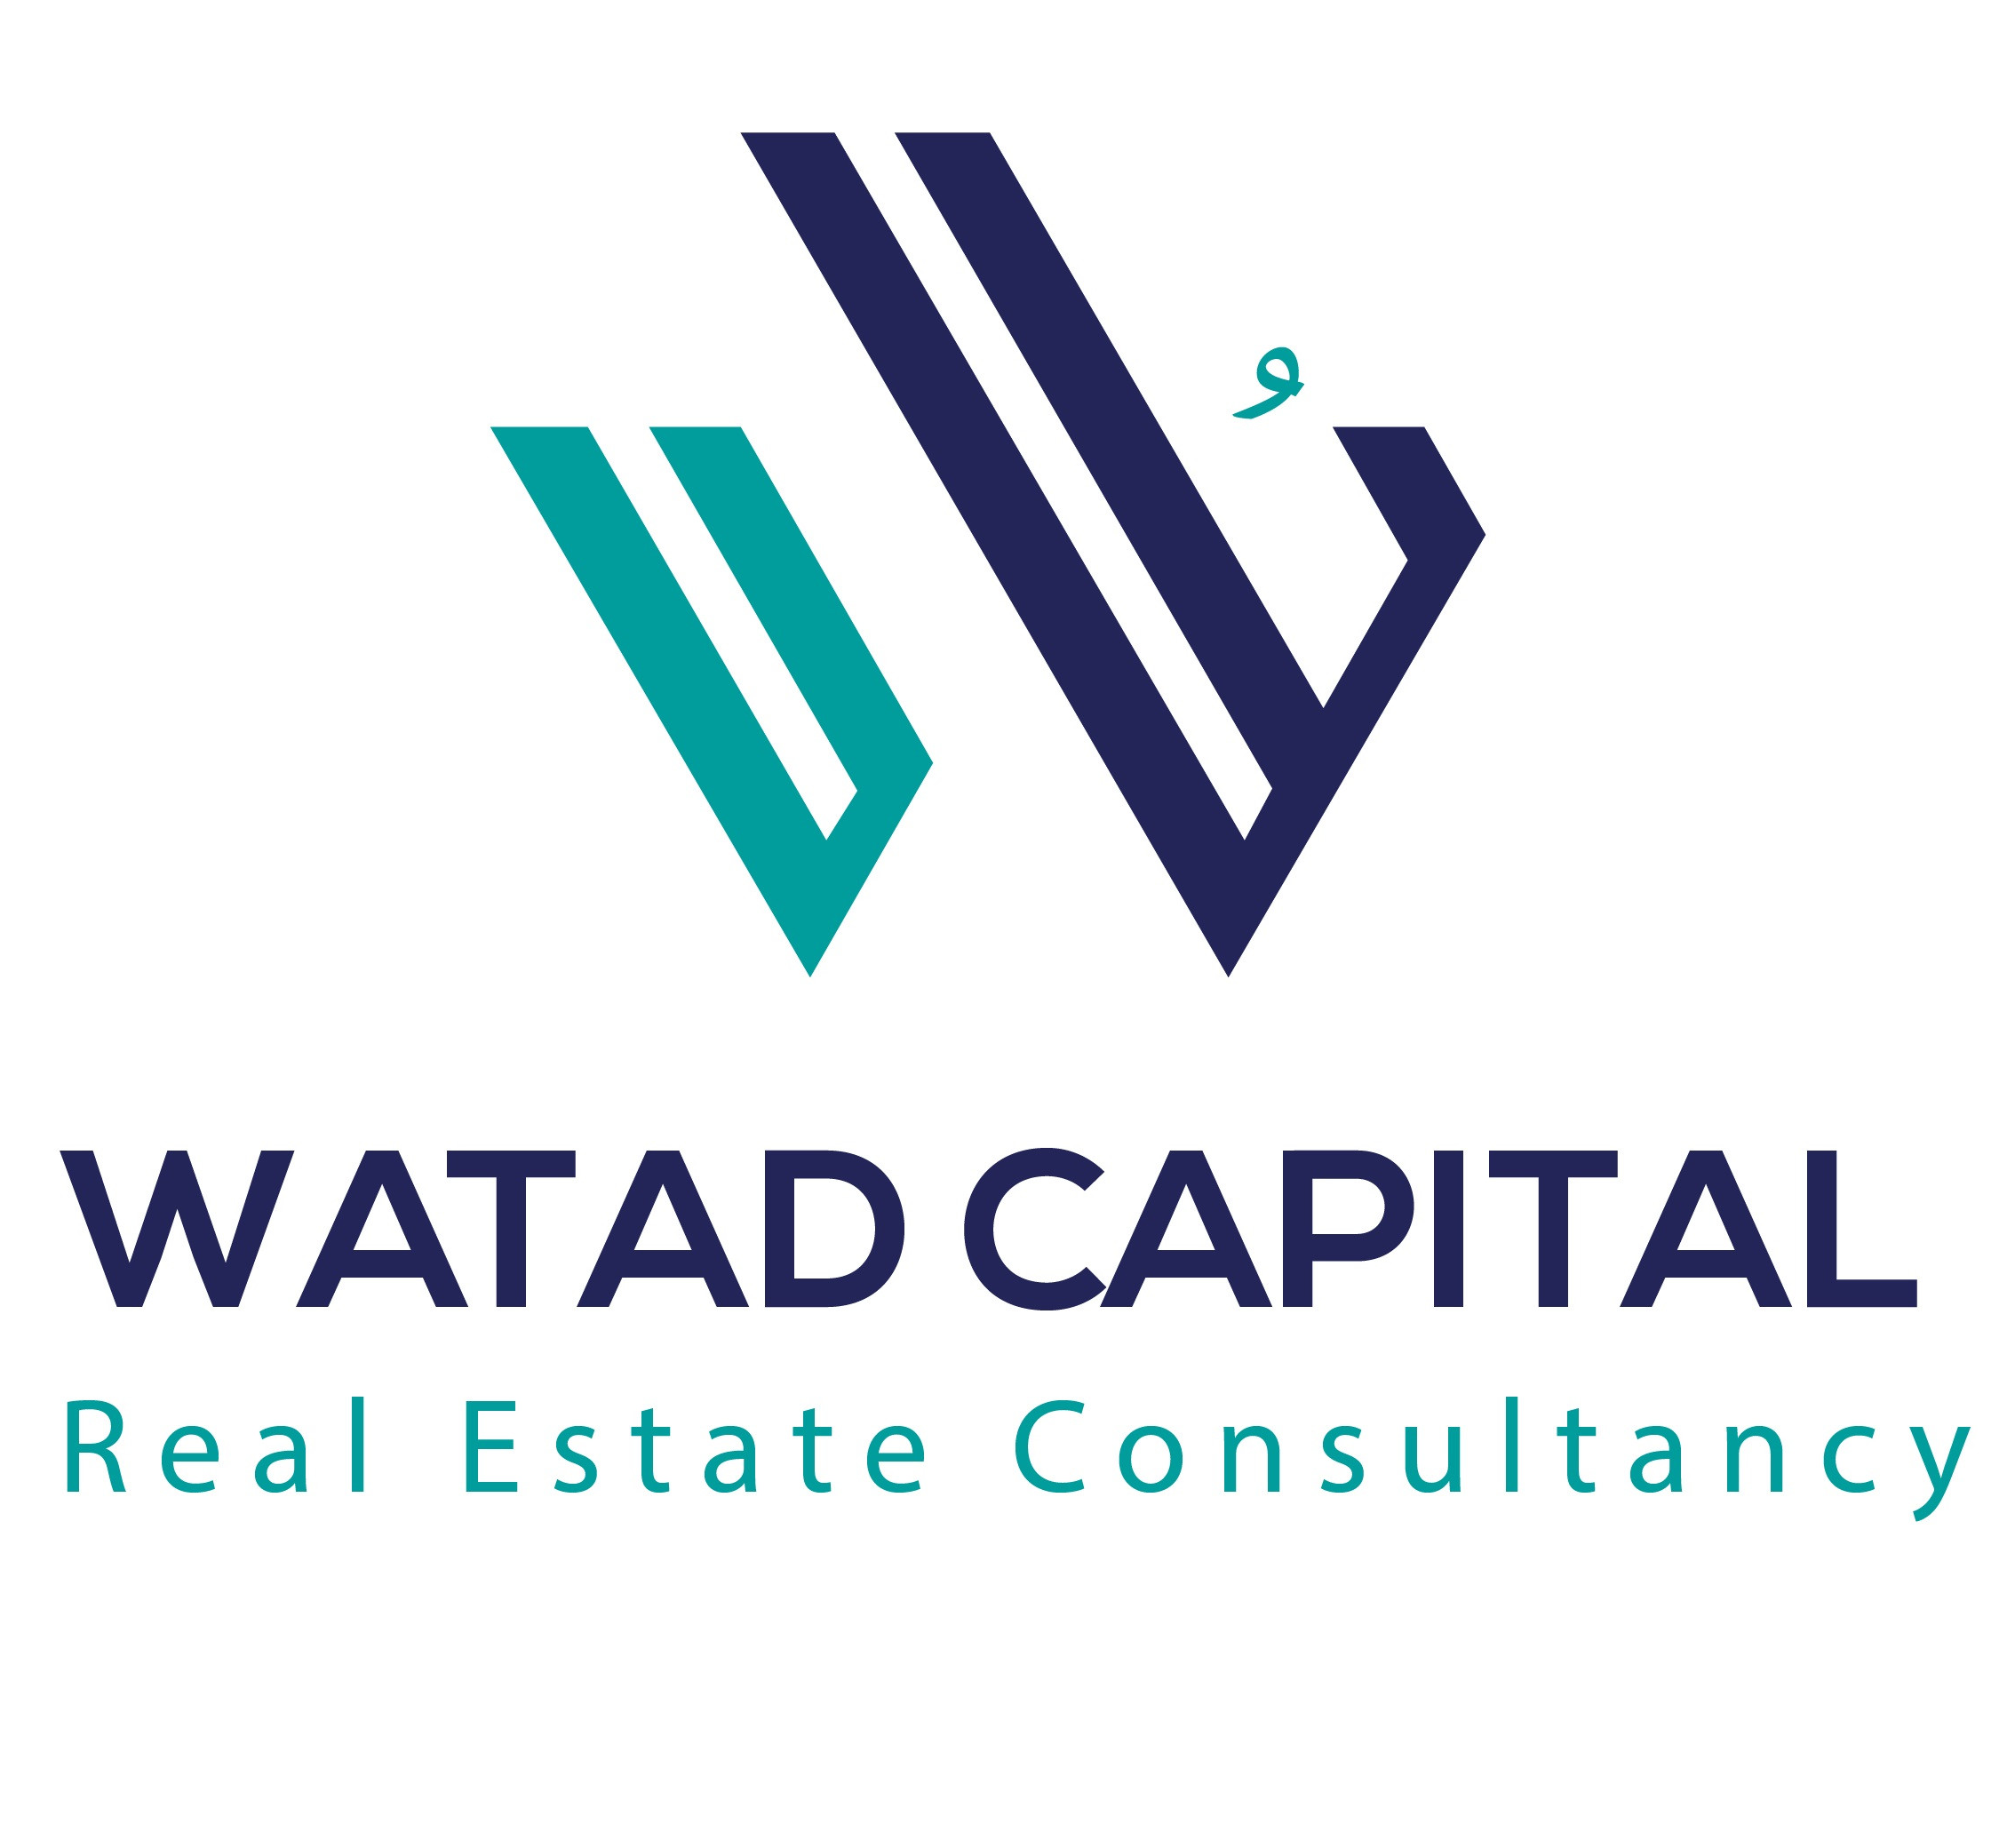 Watad Capital Real Estate